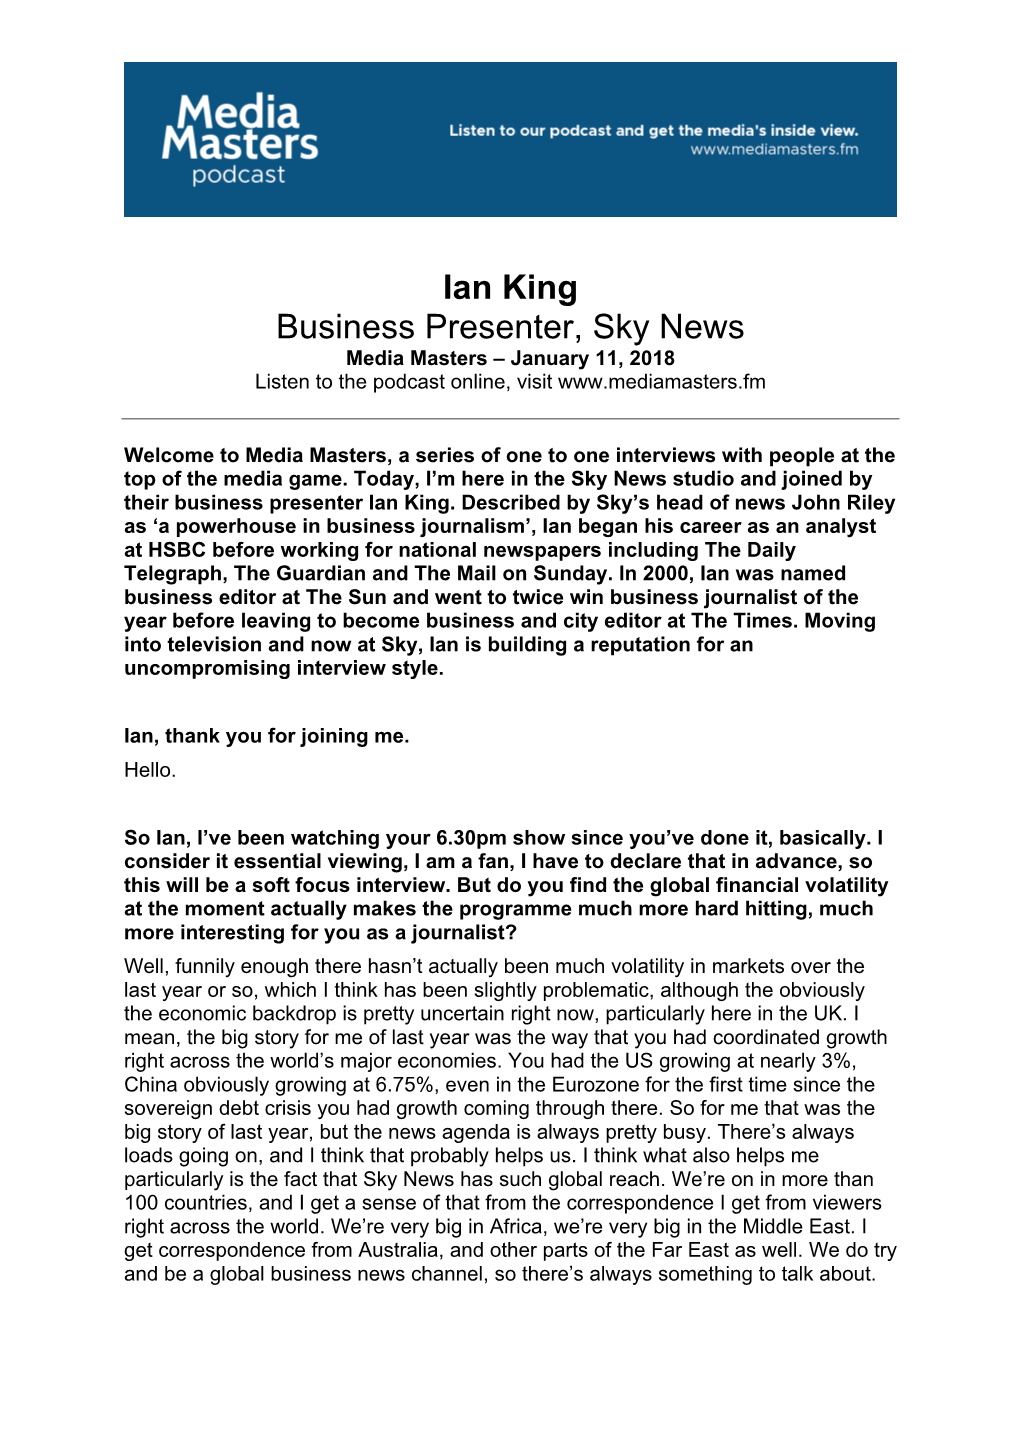 Ian King Business Presenter, Sky News